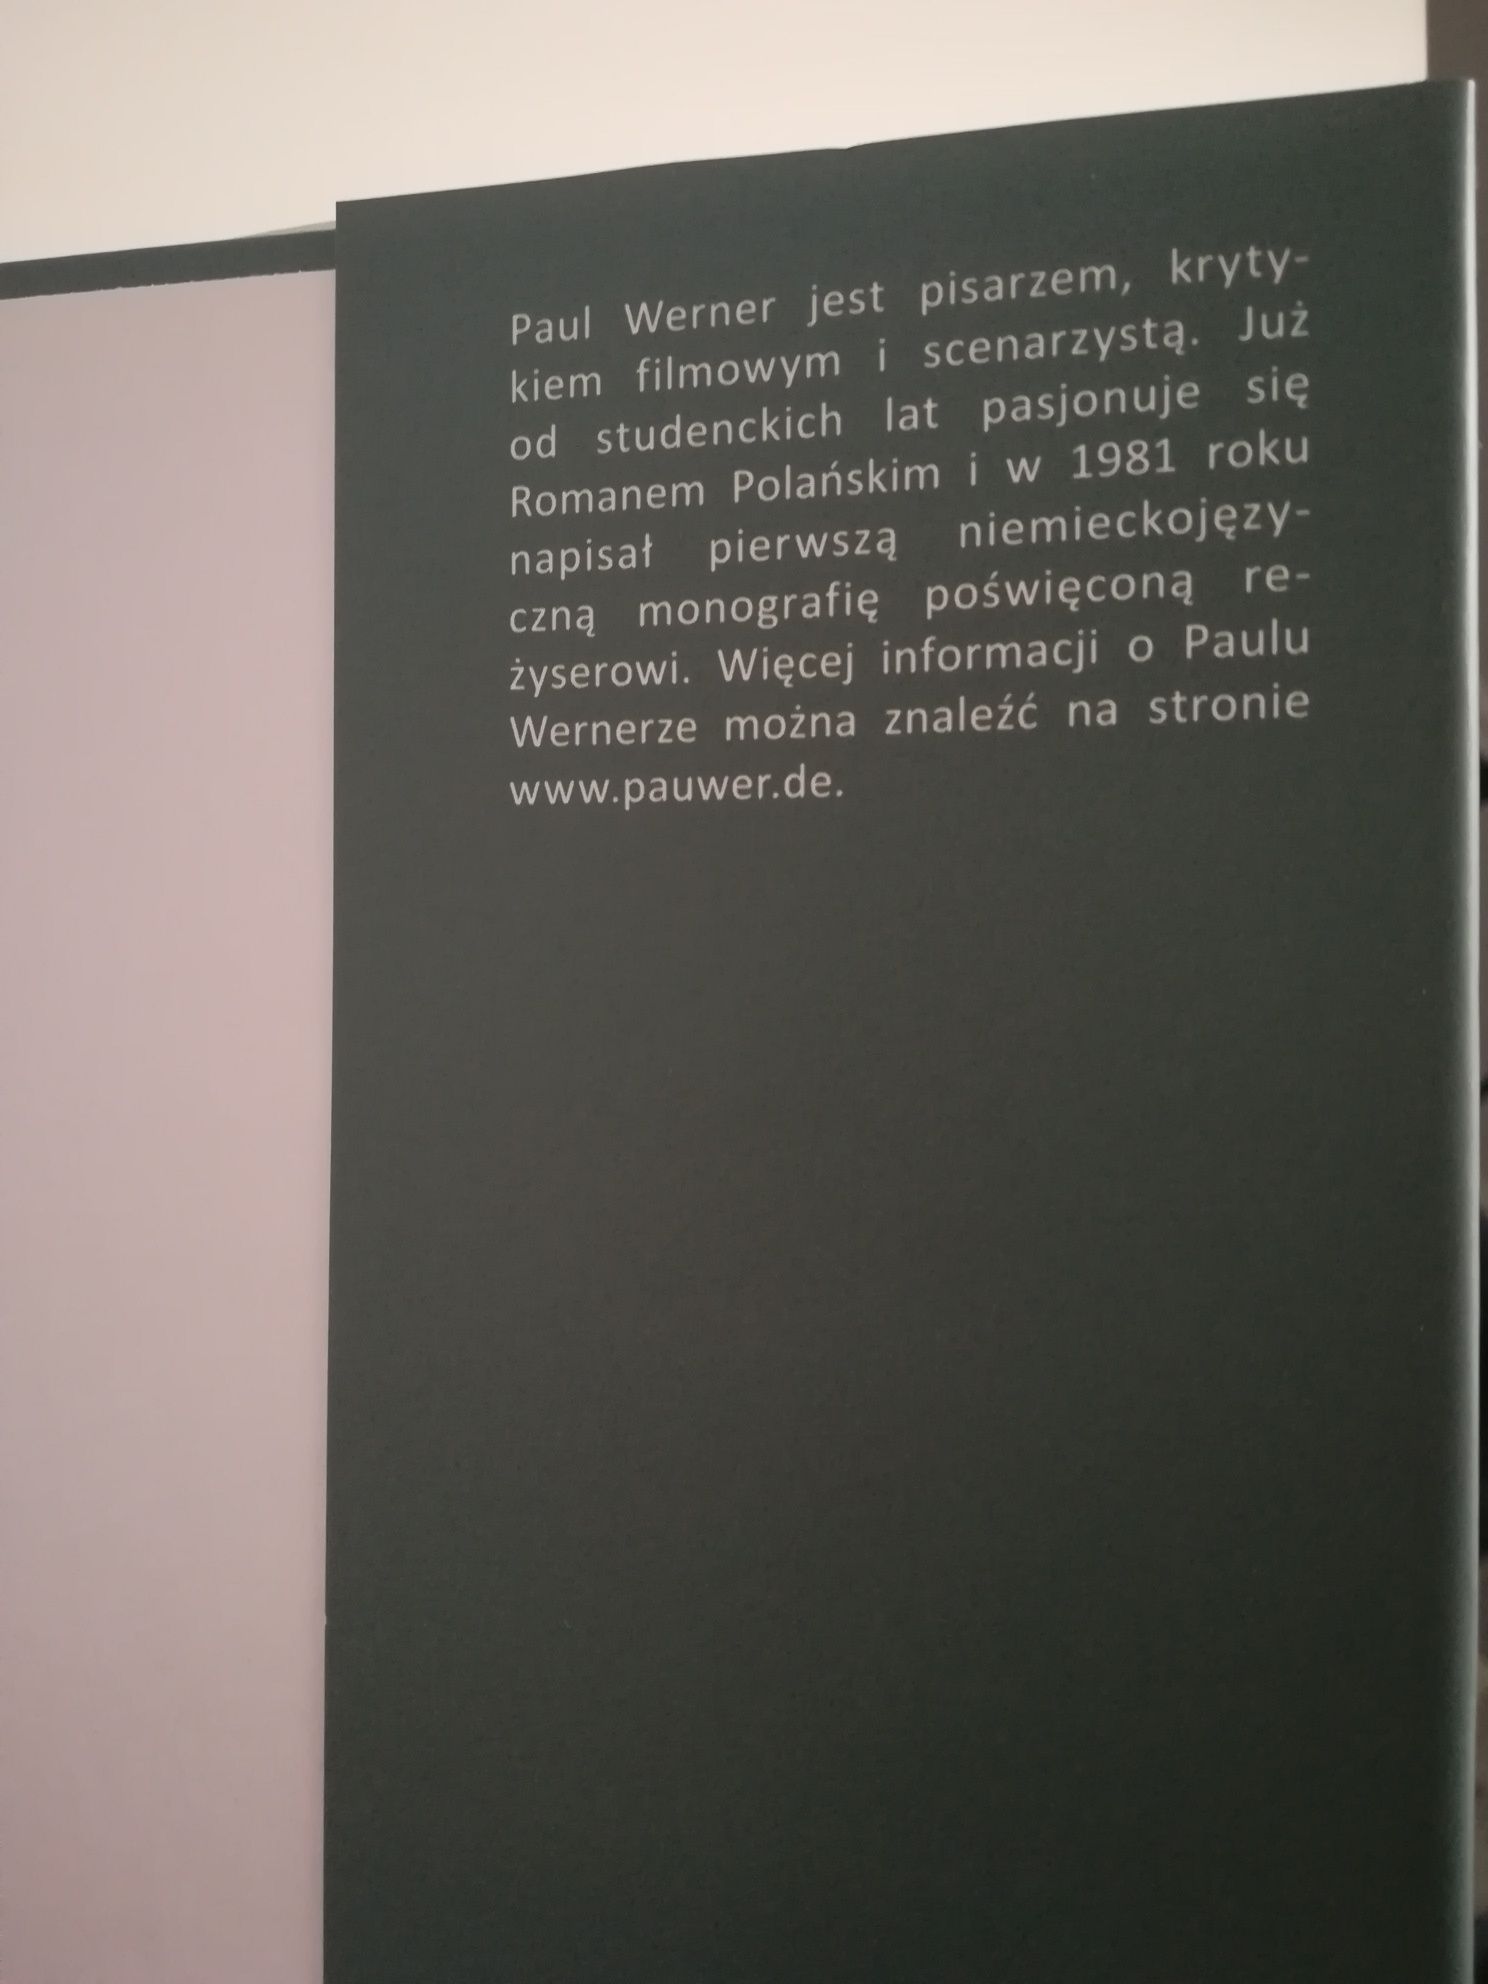 POLAŃSKI biografia Paul Werner